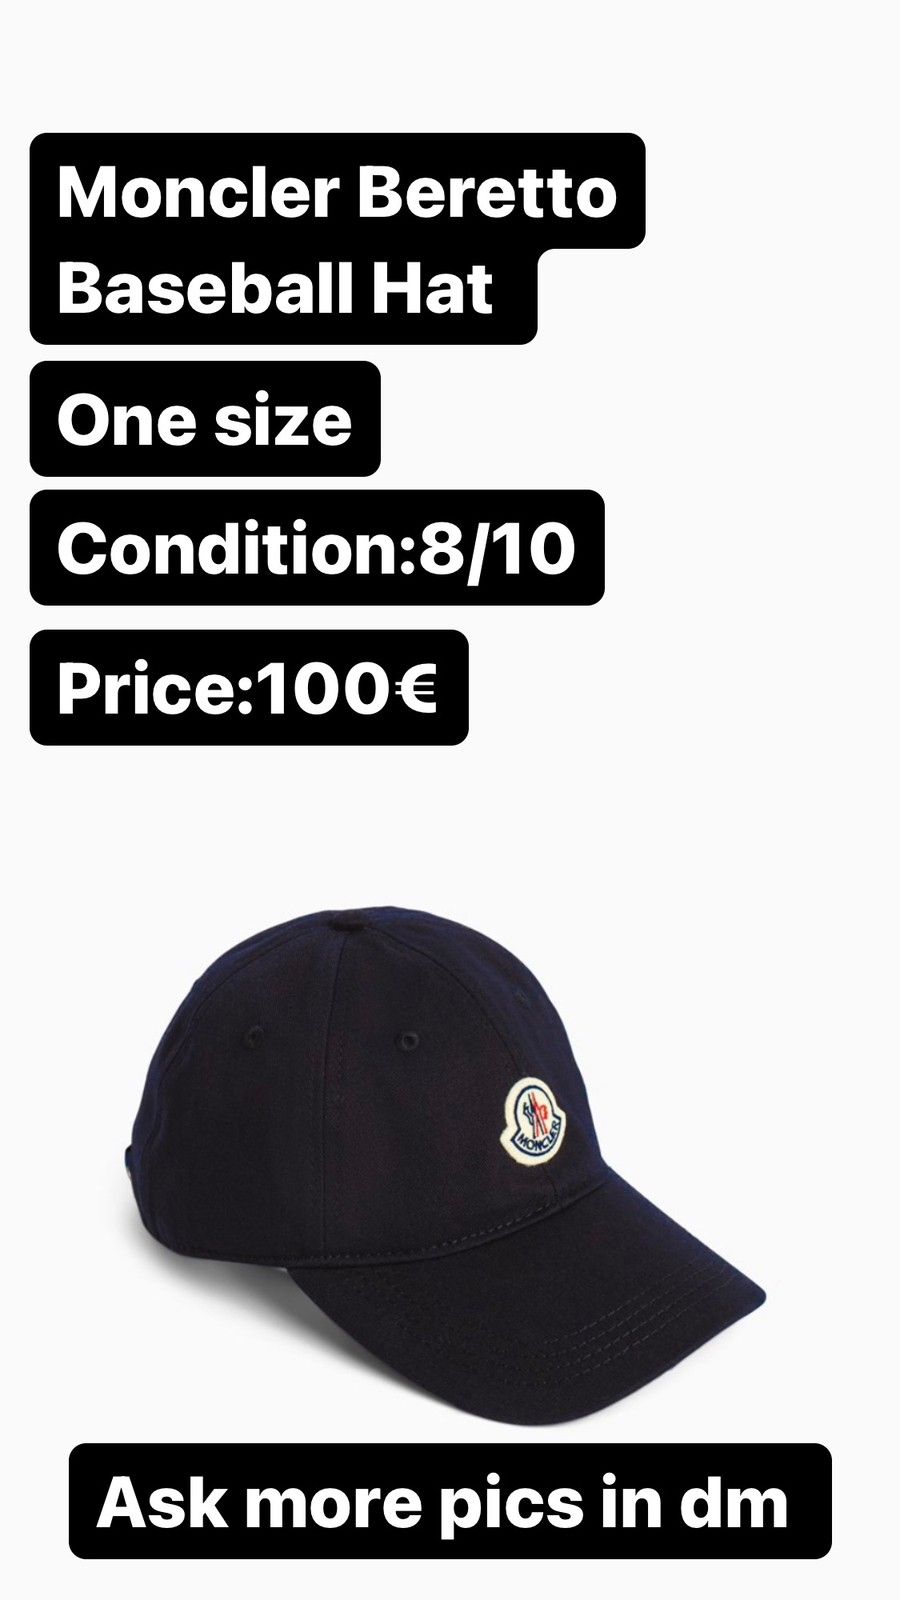 Moncler Beretto Baseball Hat